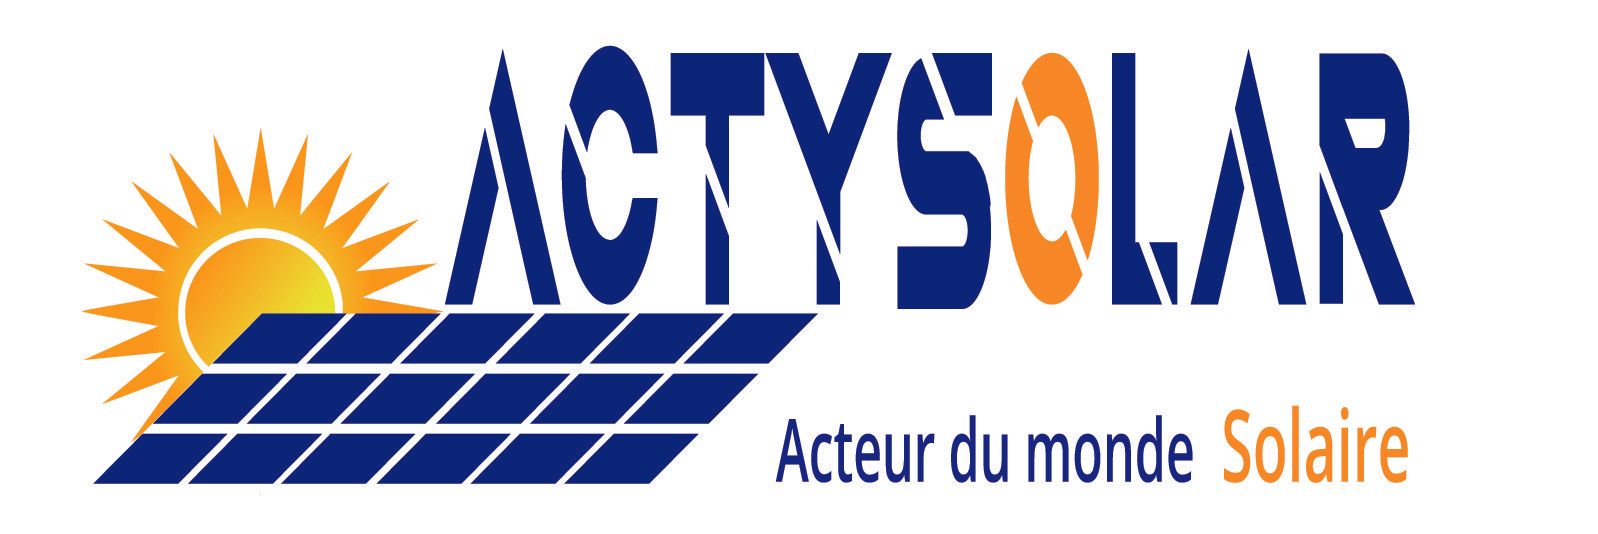 ACTYSOLAR_logo